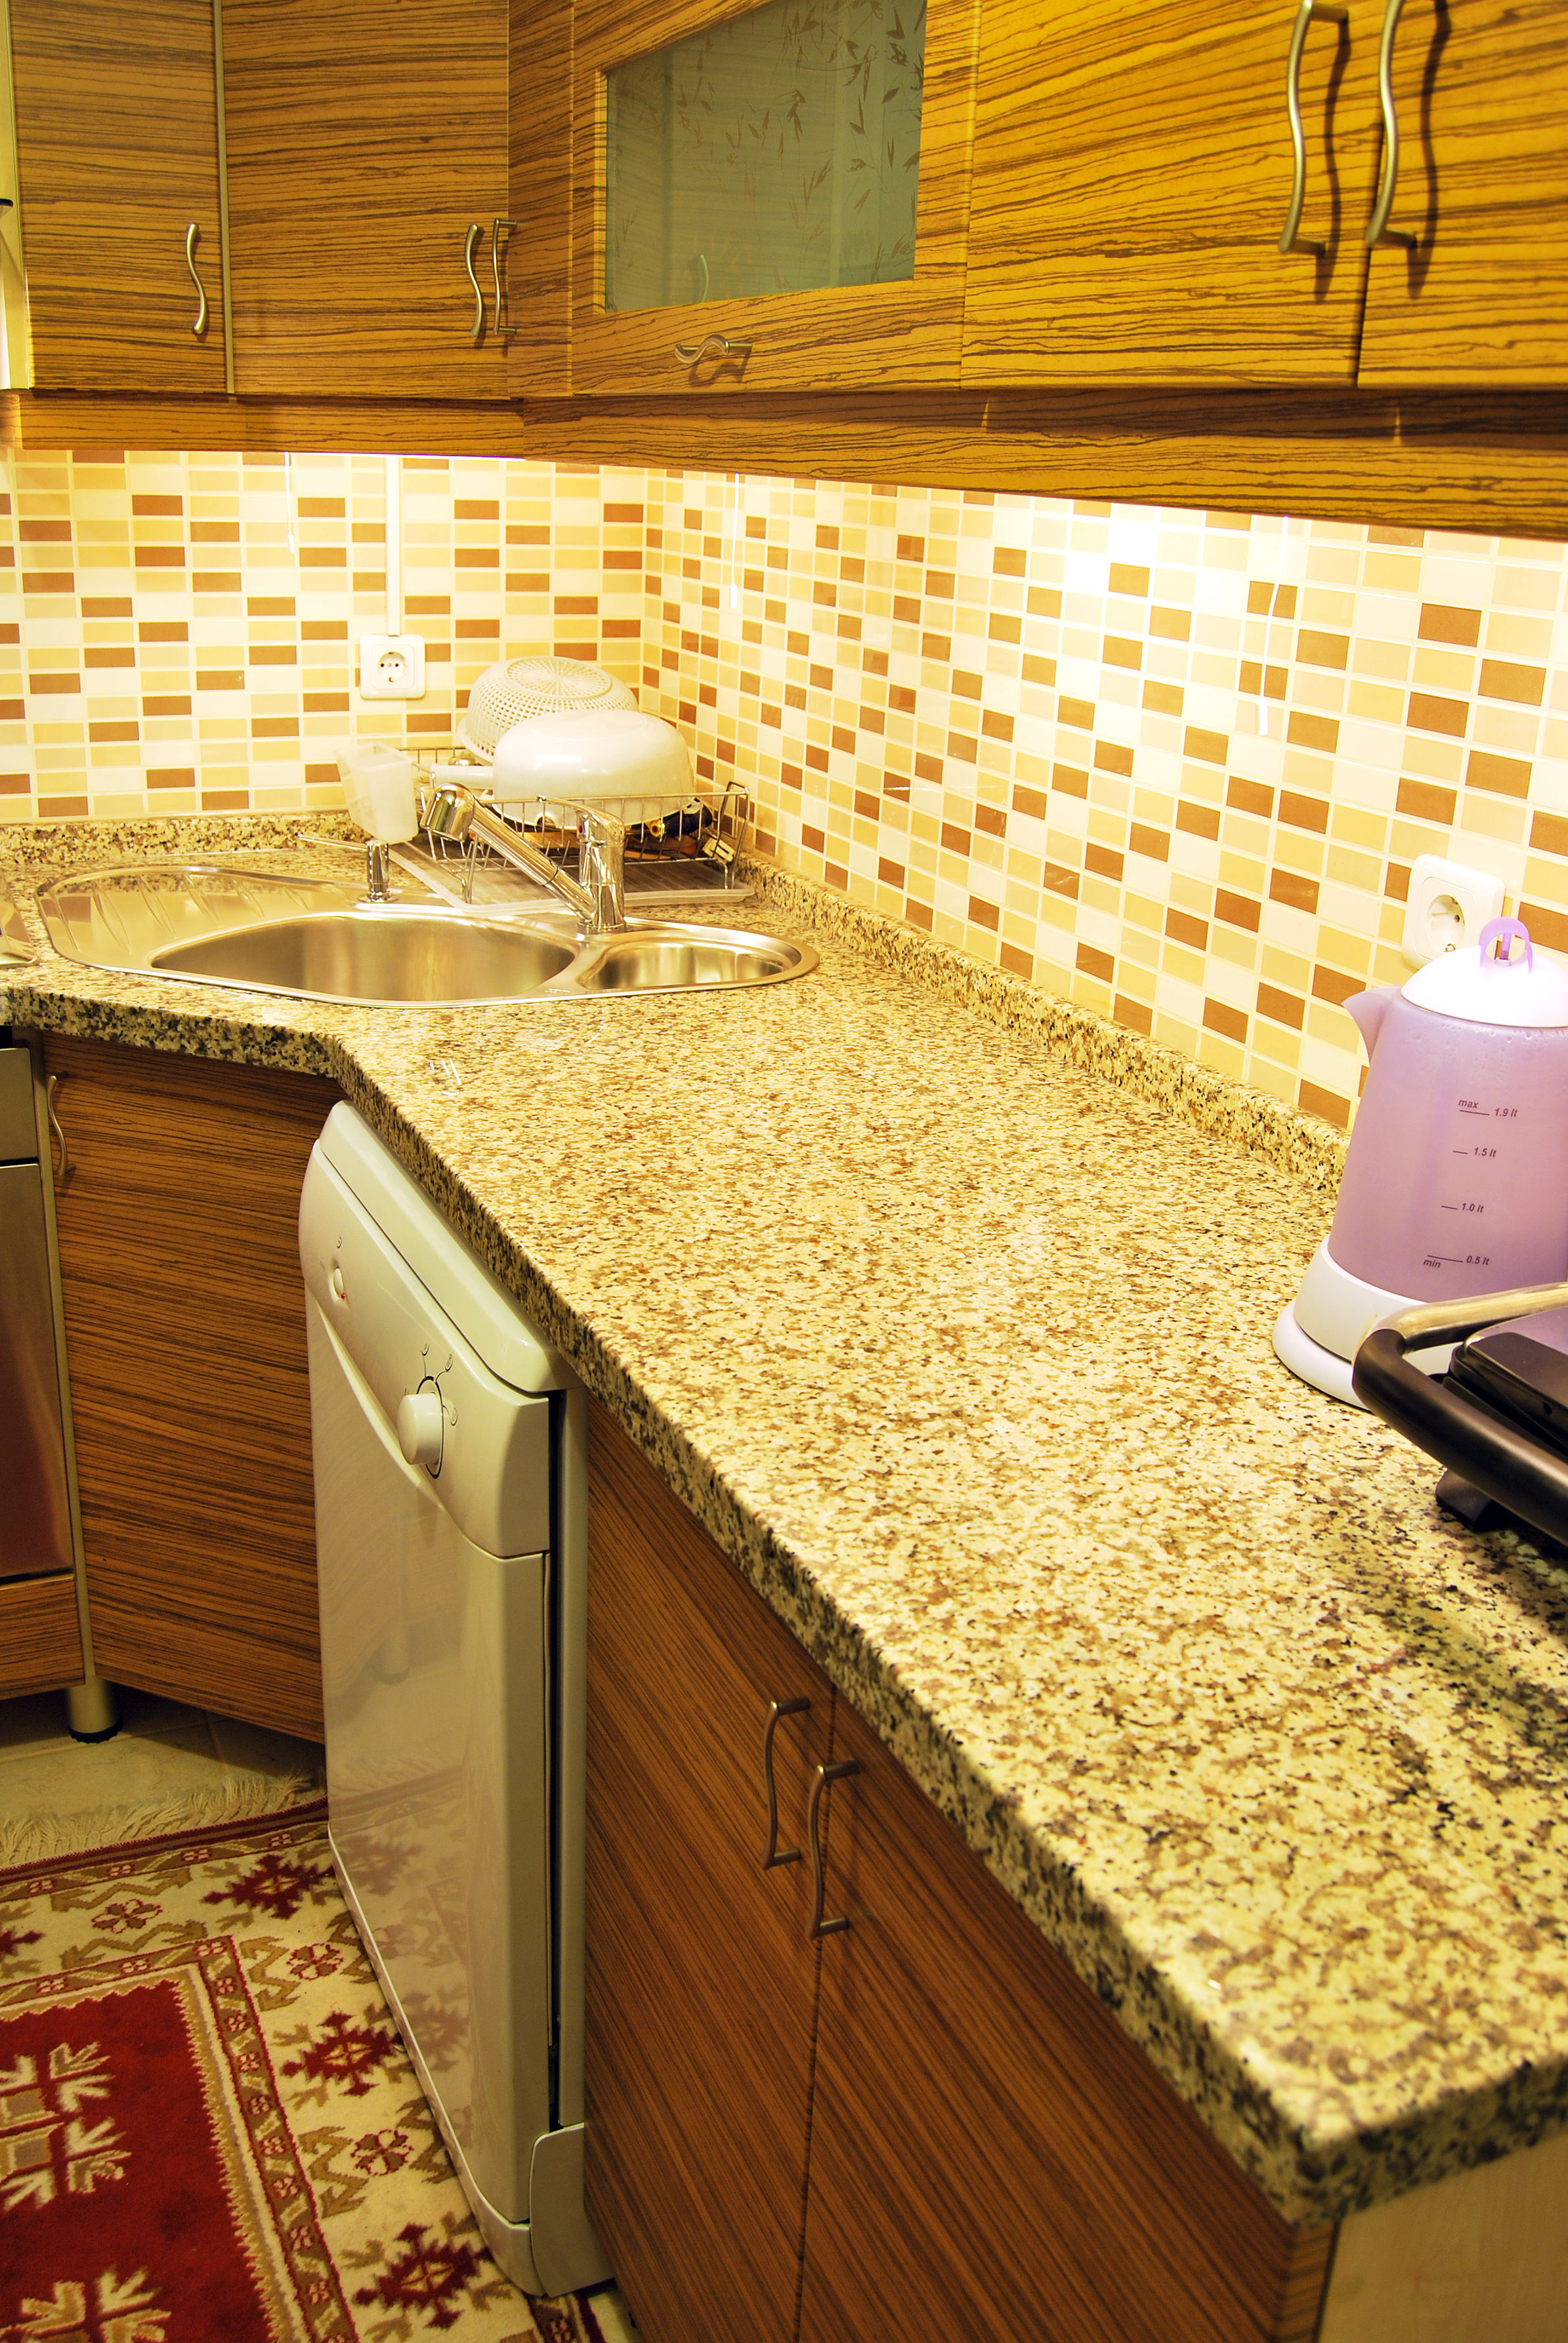 Ways to Prepare for Your New Granite Kitchen Countertops in Folsom, CA